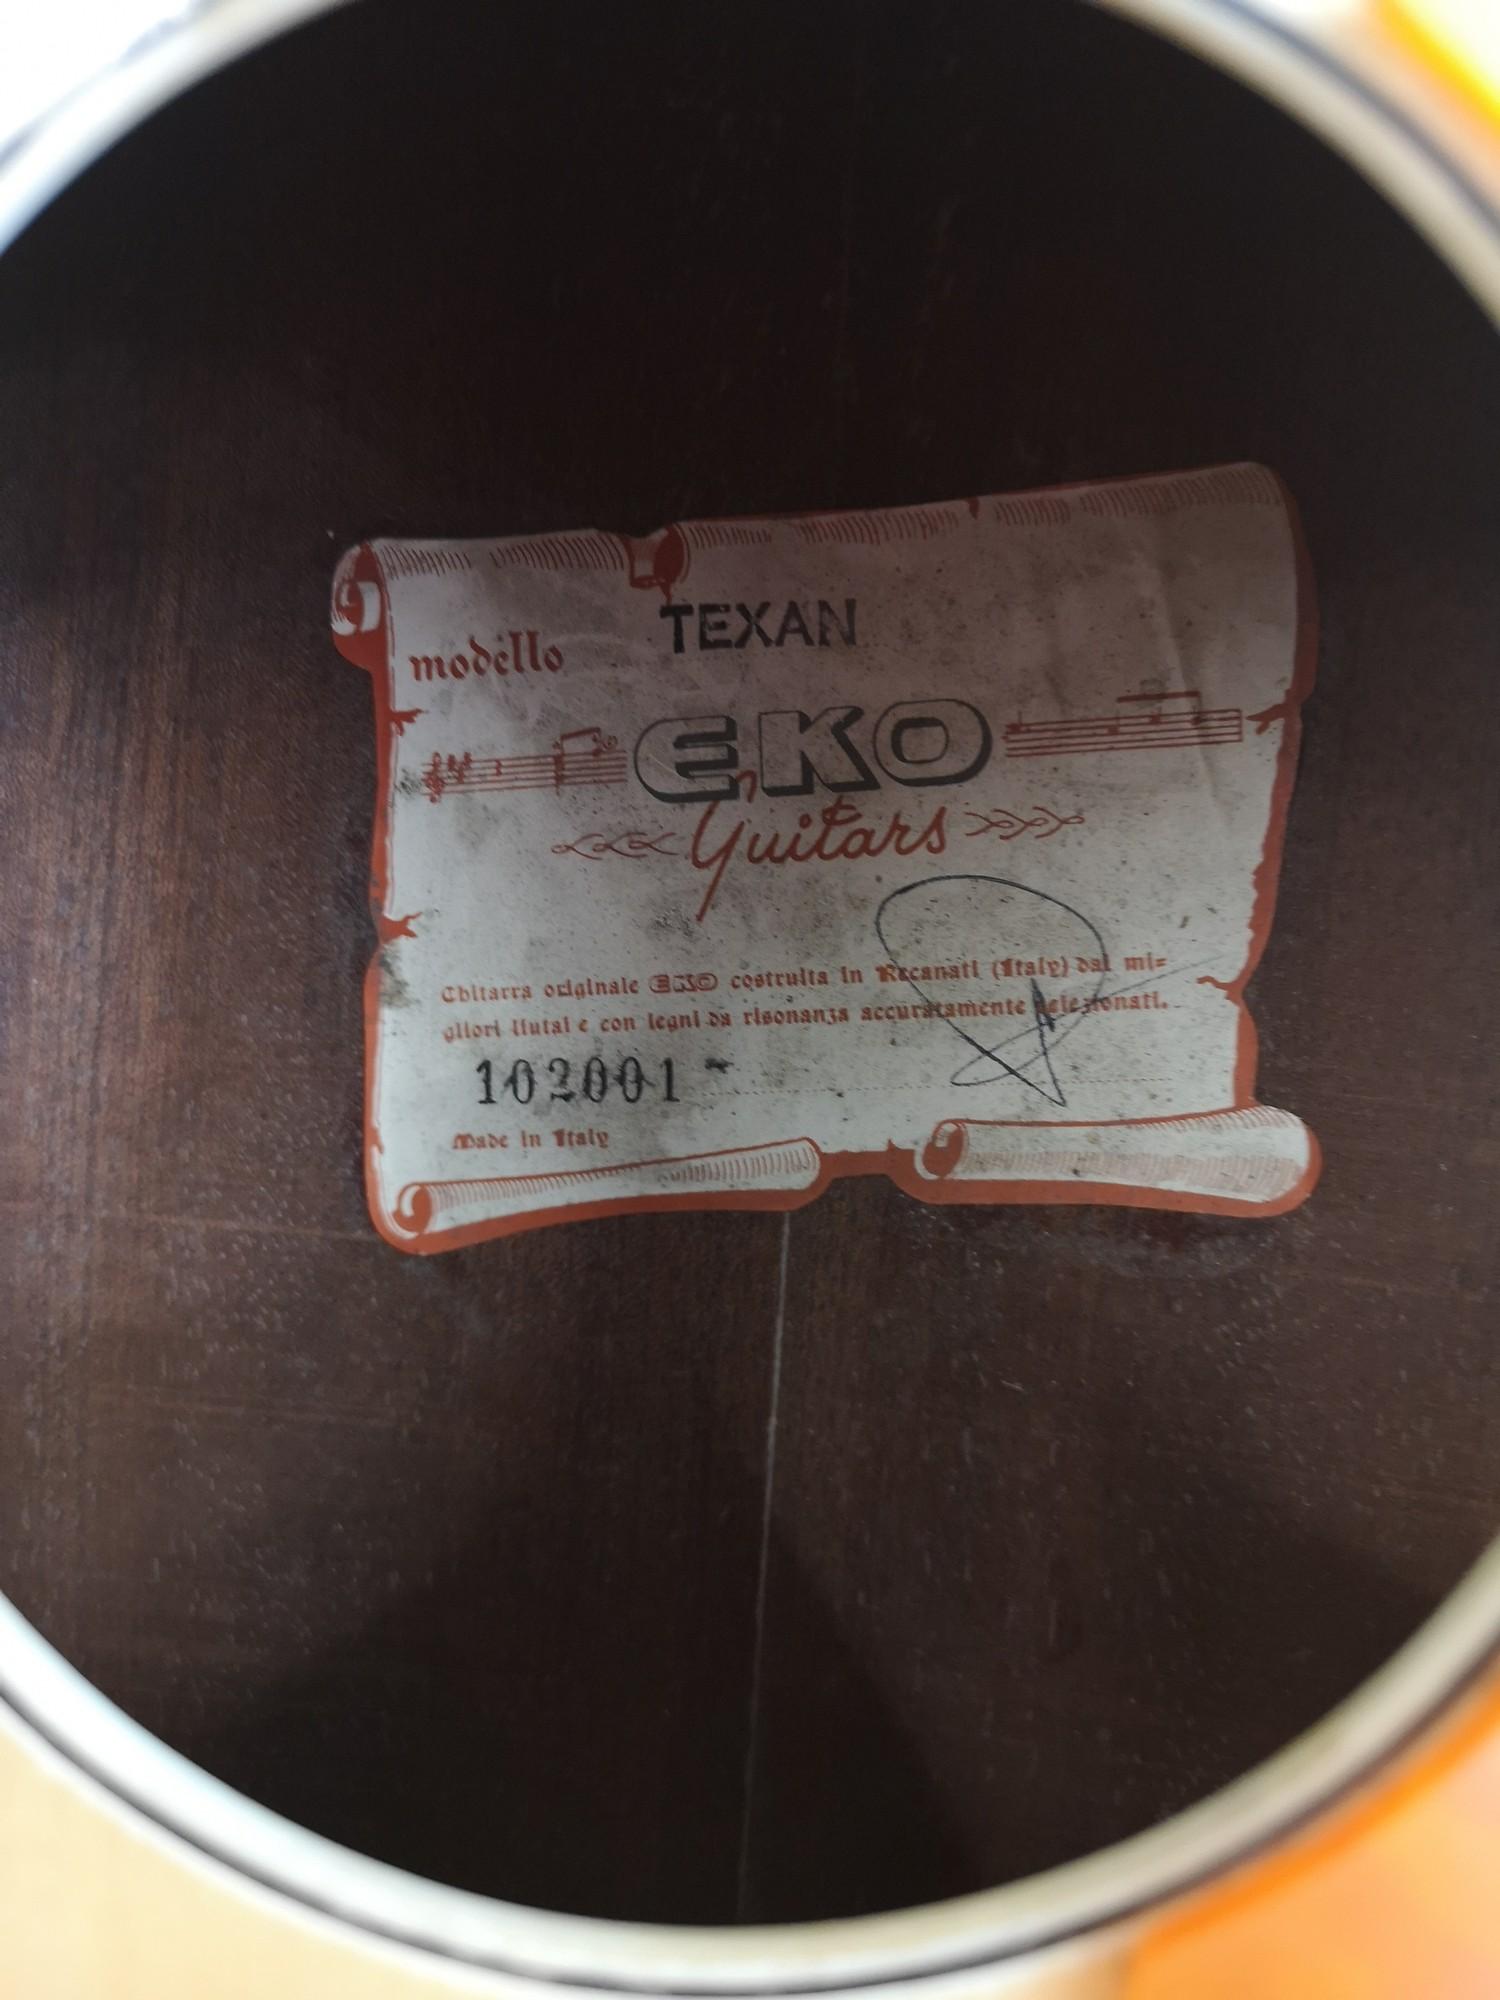 Eko texan acoustic guitar 102001 - Image 3 of 3